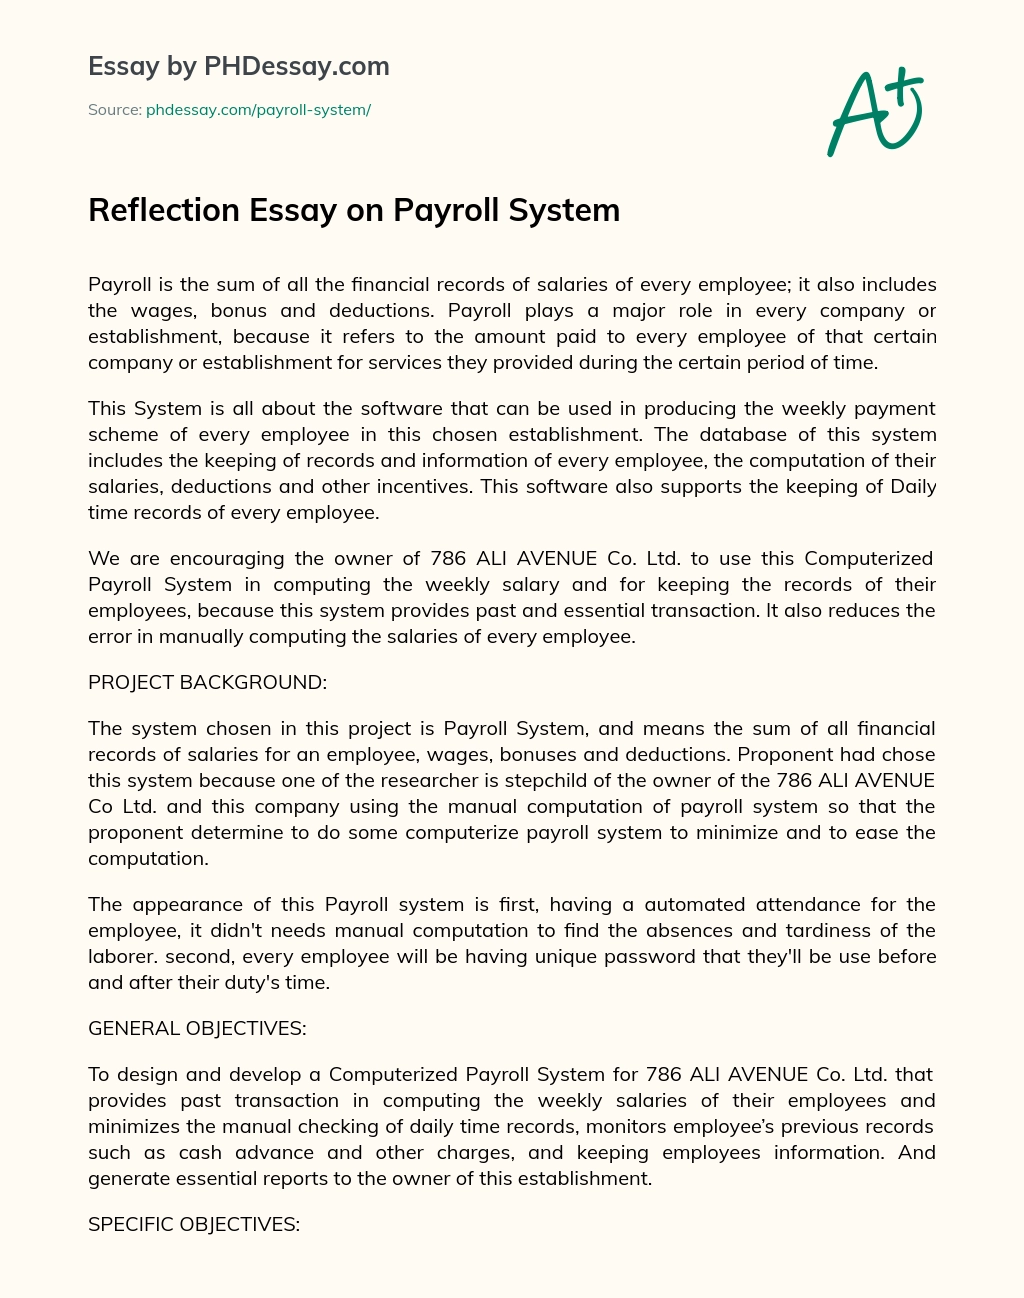 Reflection Essay on Payroll System essay